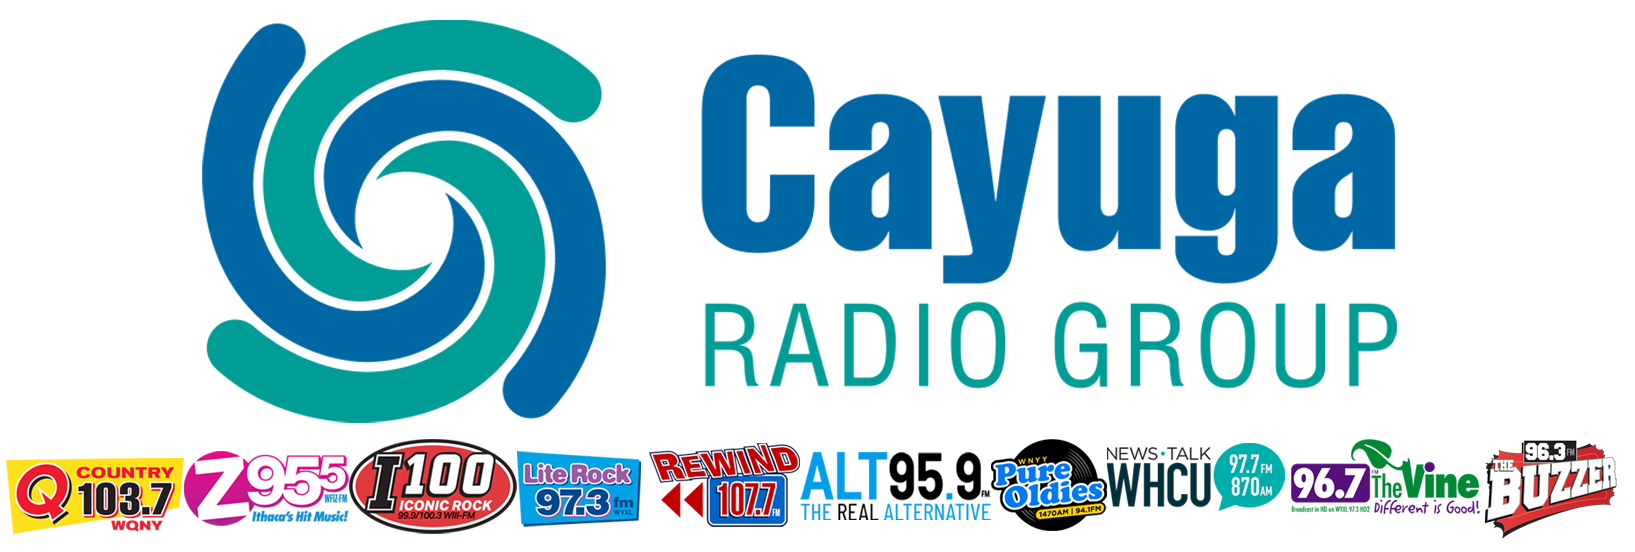 Cayuaga Radio Group